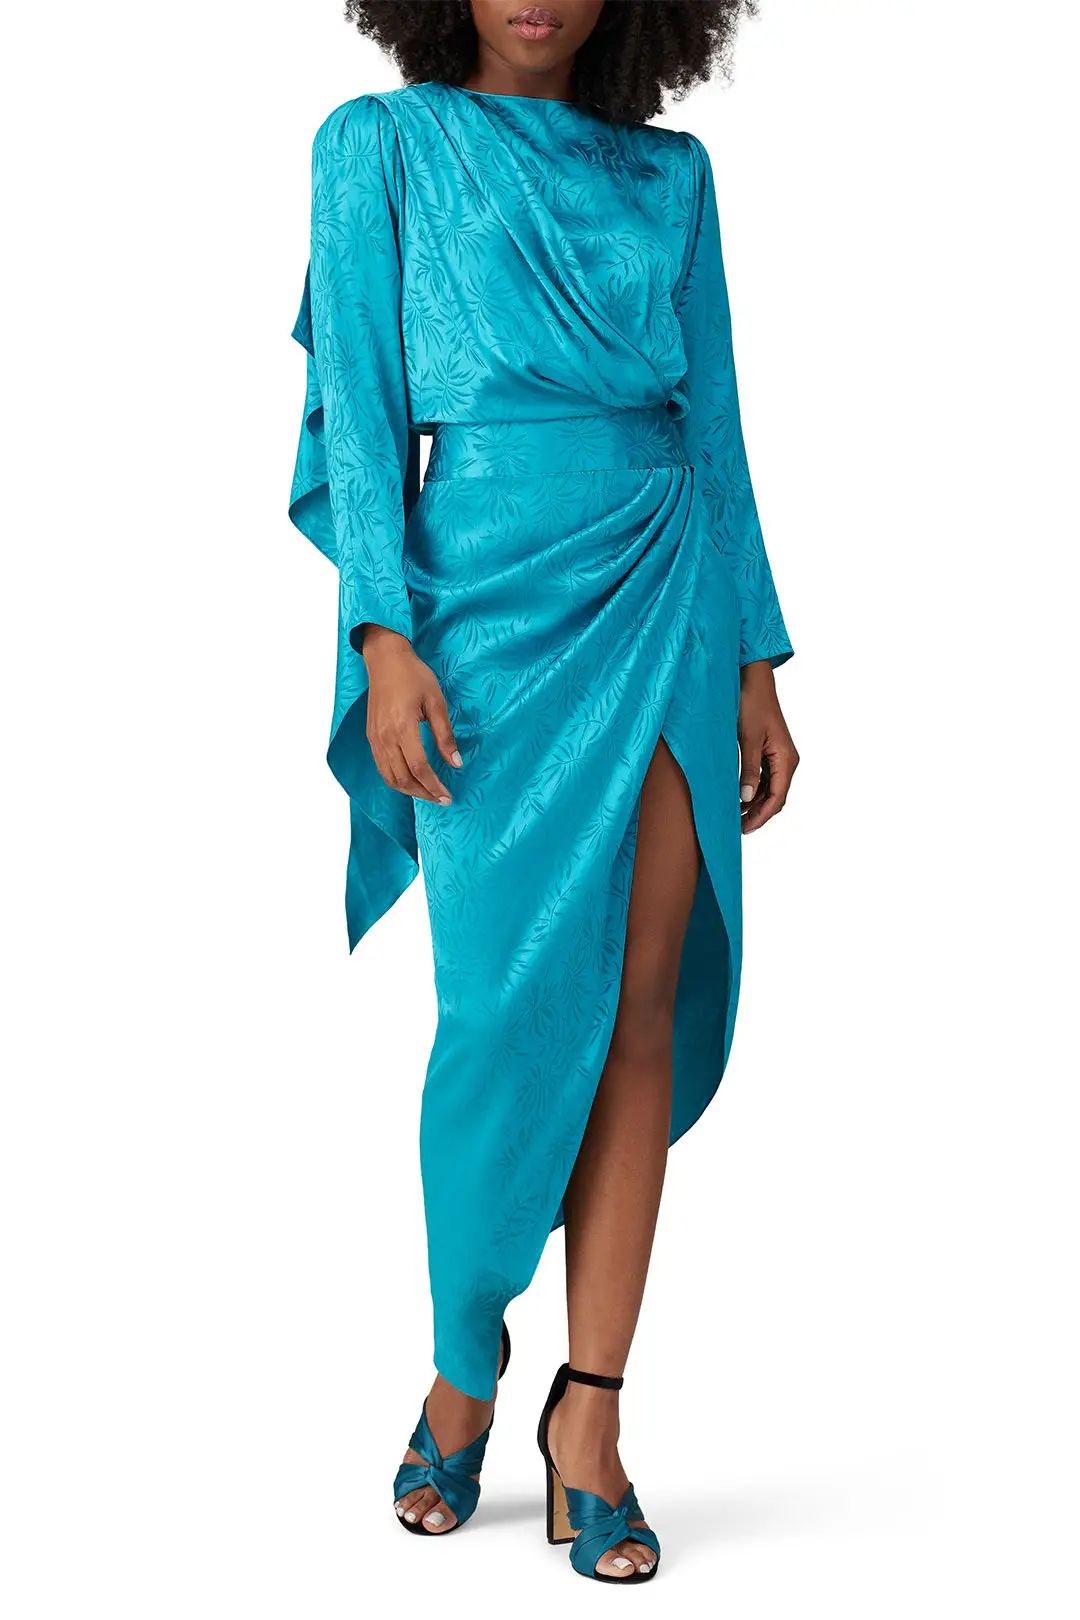 Blue Jade Dress | Rent the Runway